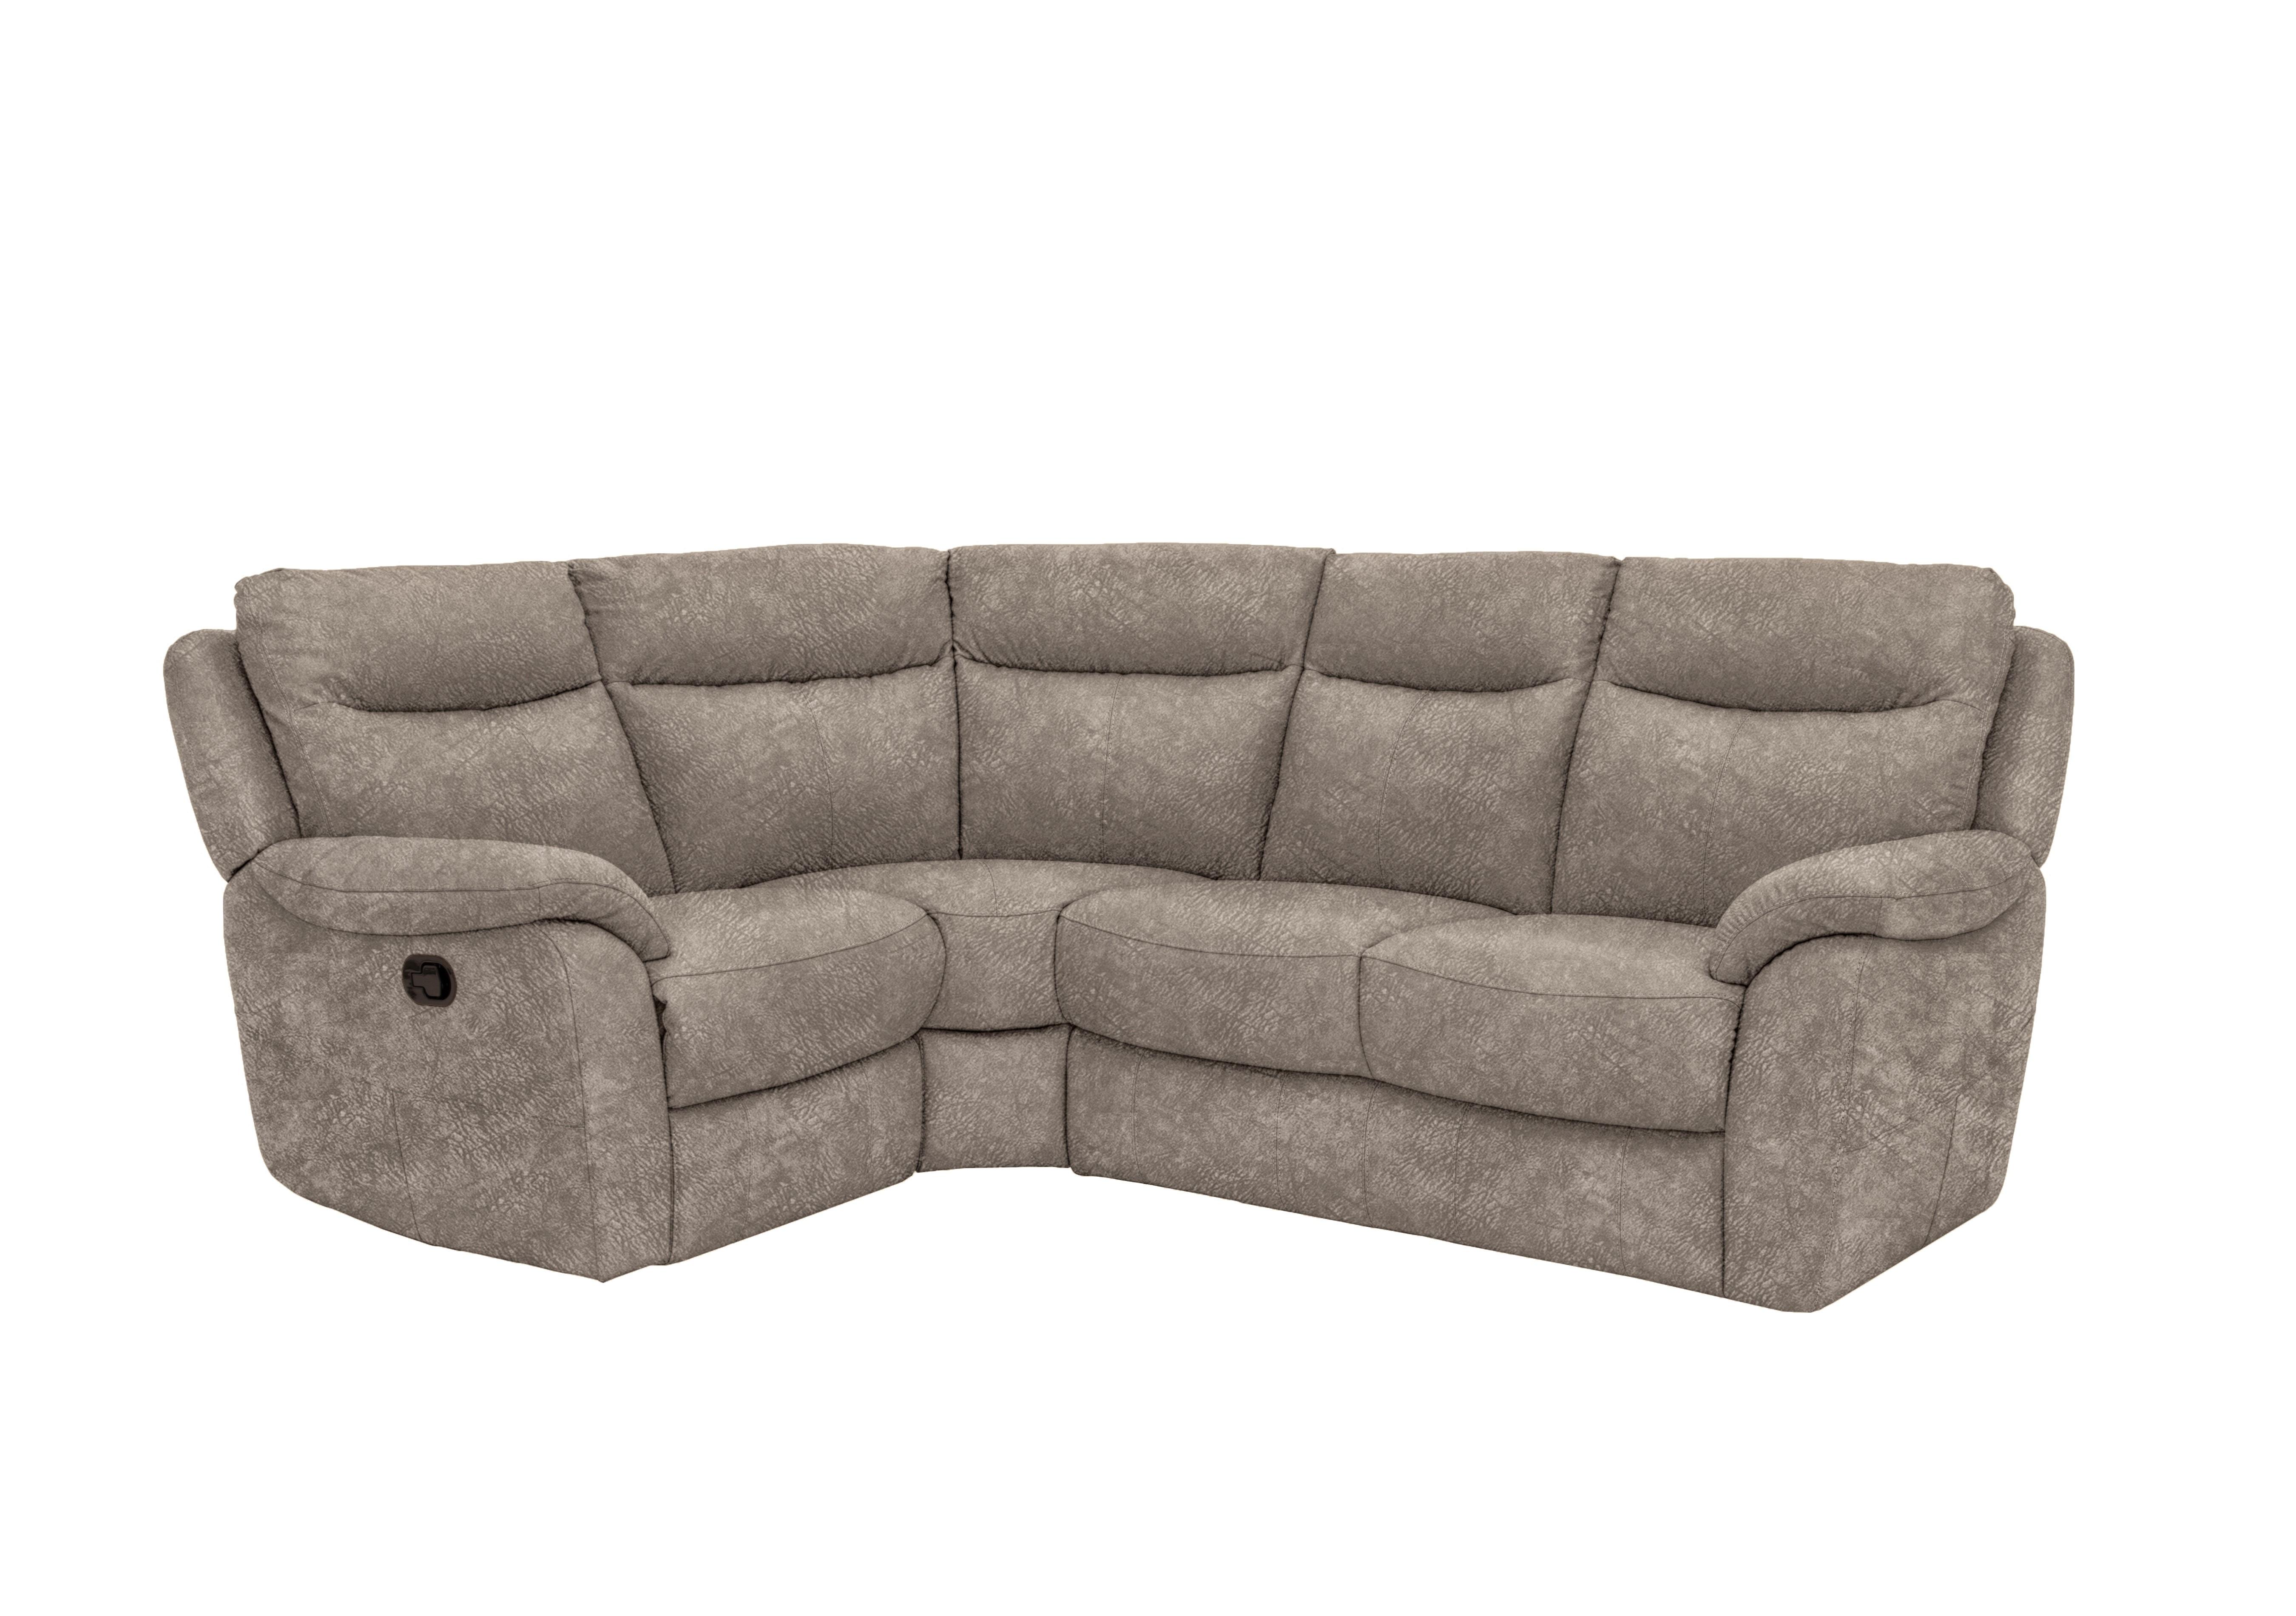 Snug Compact Fabric Corner Sofa in Bfa-Bnn-R29 Fv1 Mink on Furniture Village